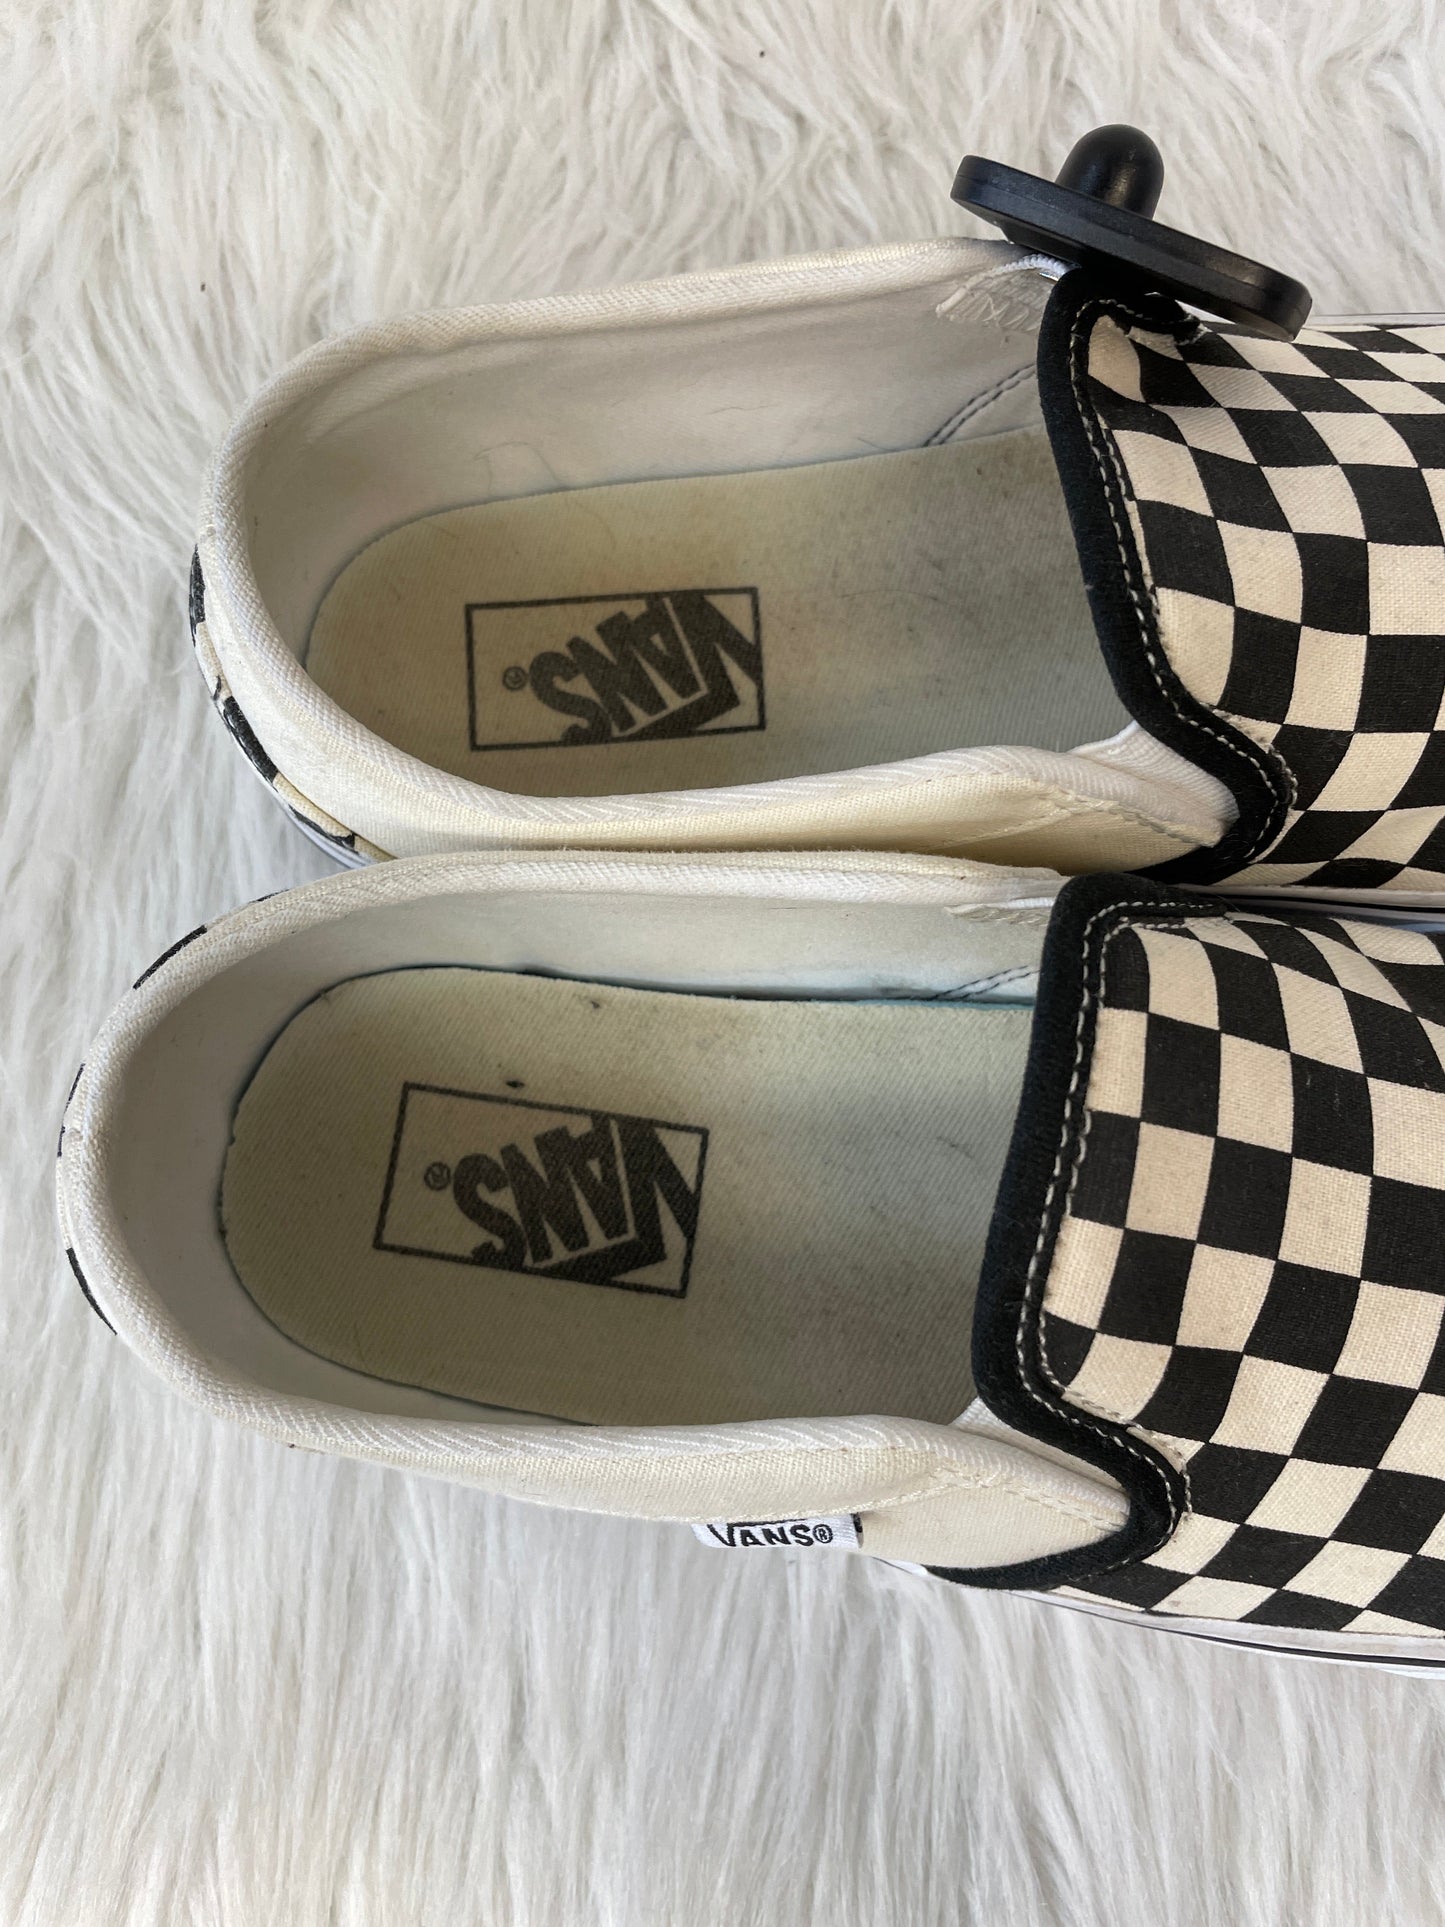 Black & White Shoes Sneakers Vans, Size 10